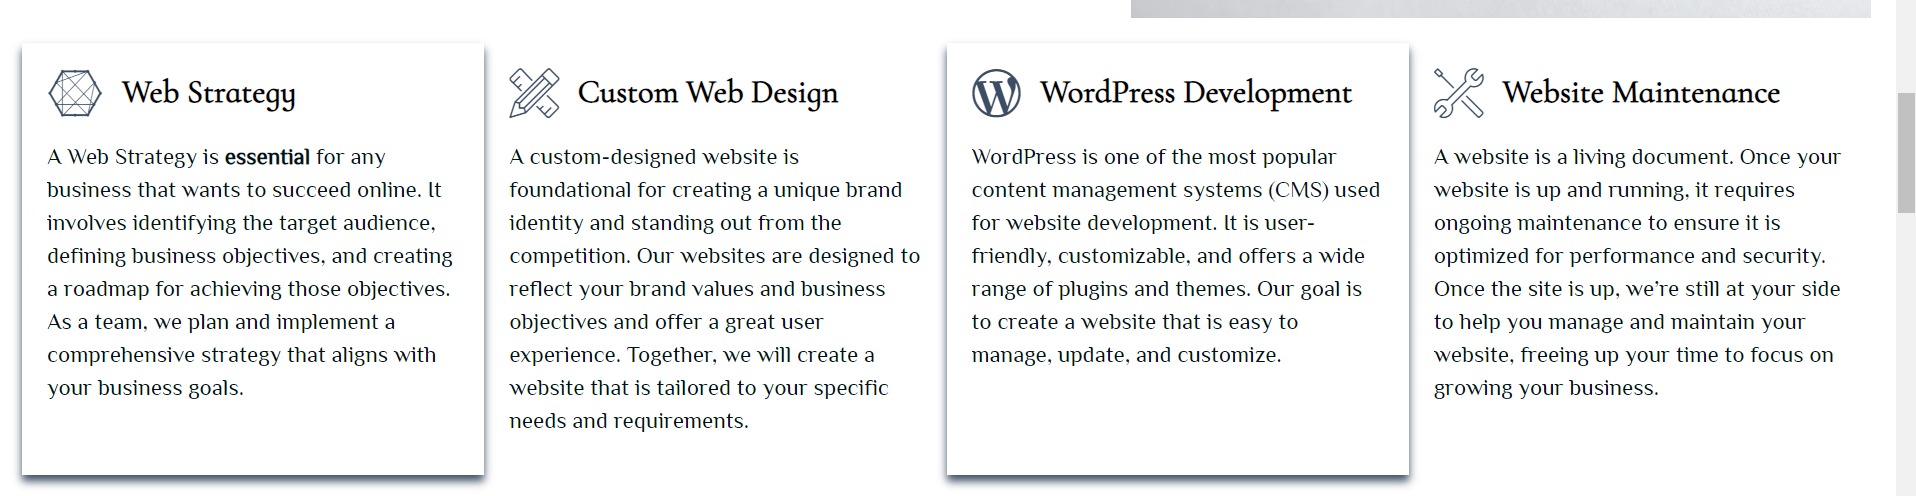 Web Design and Developments Services